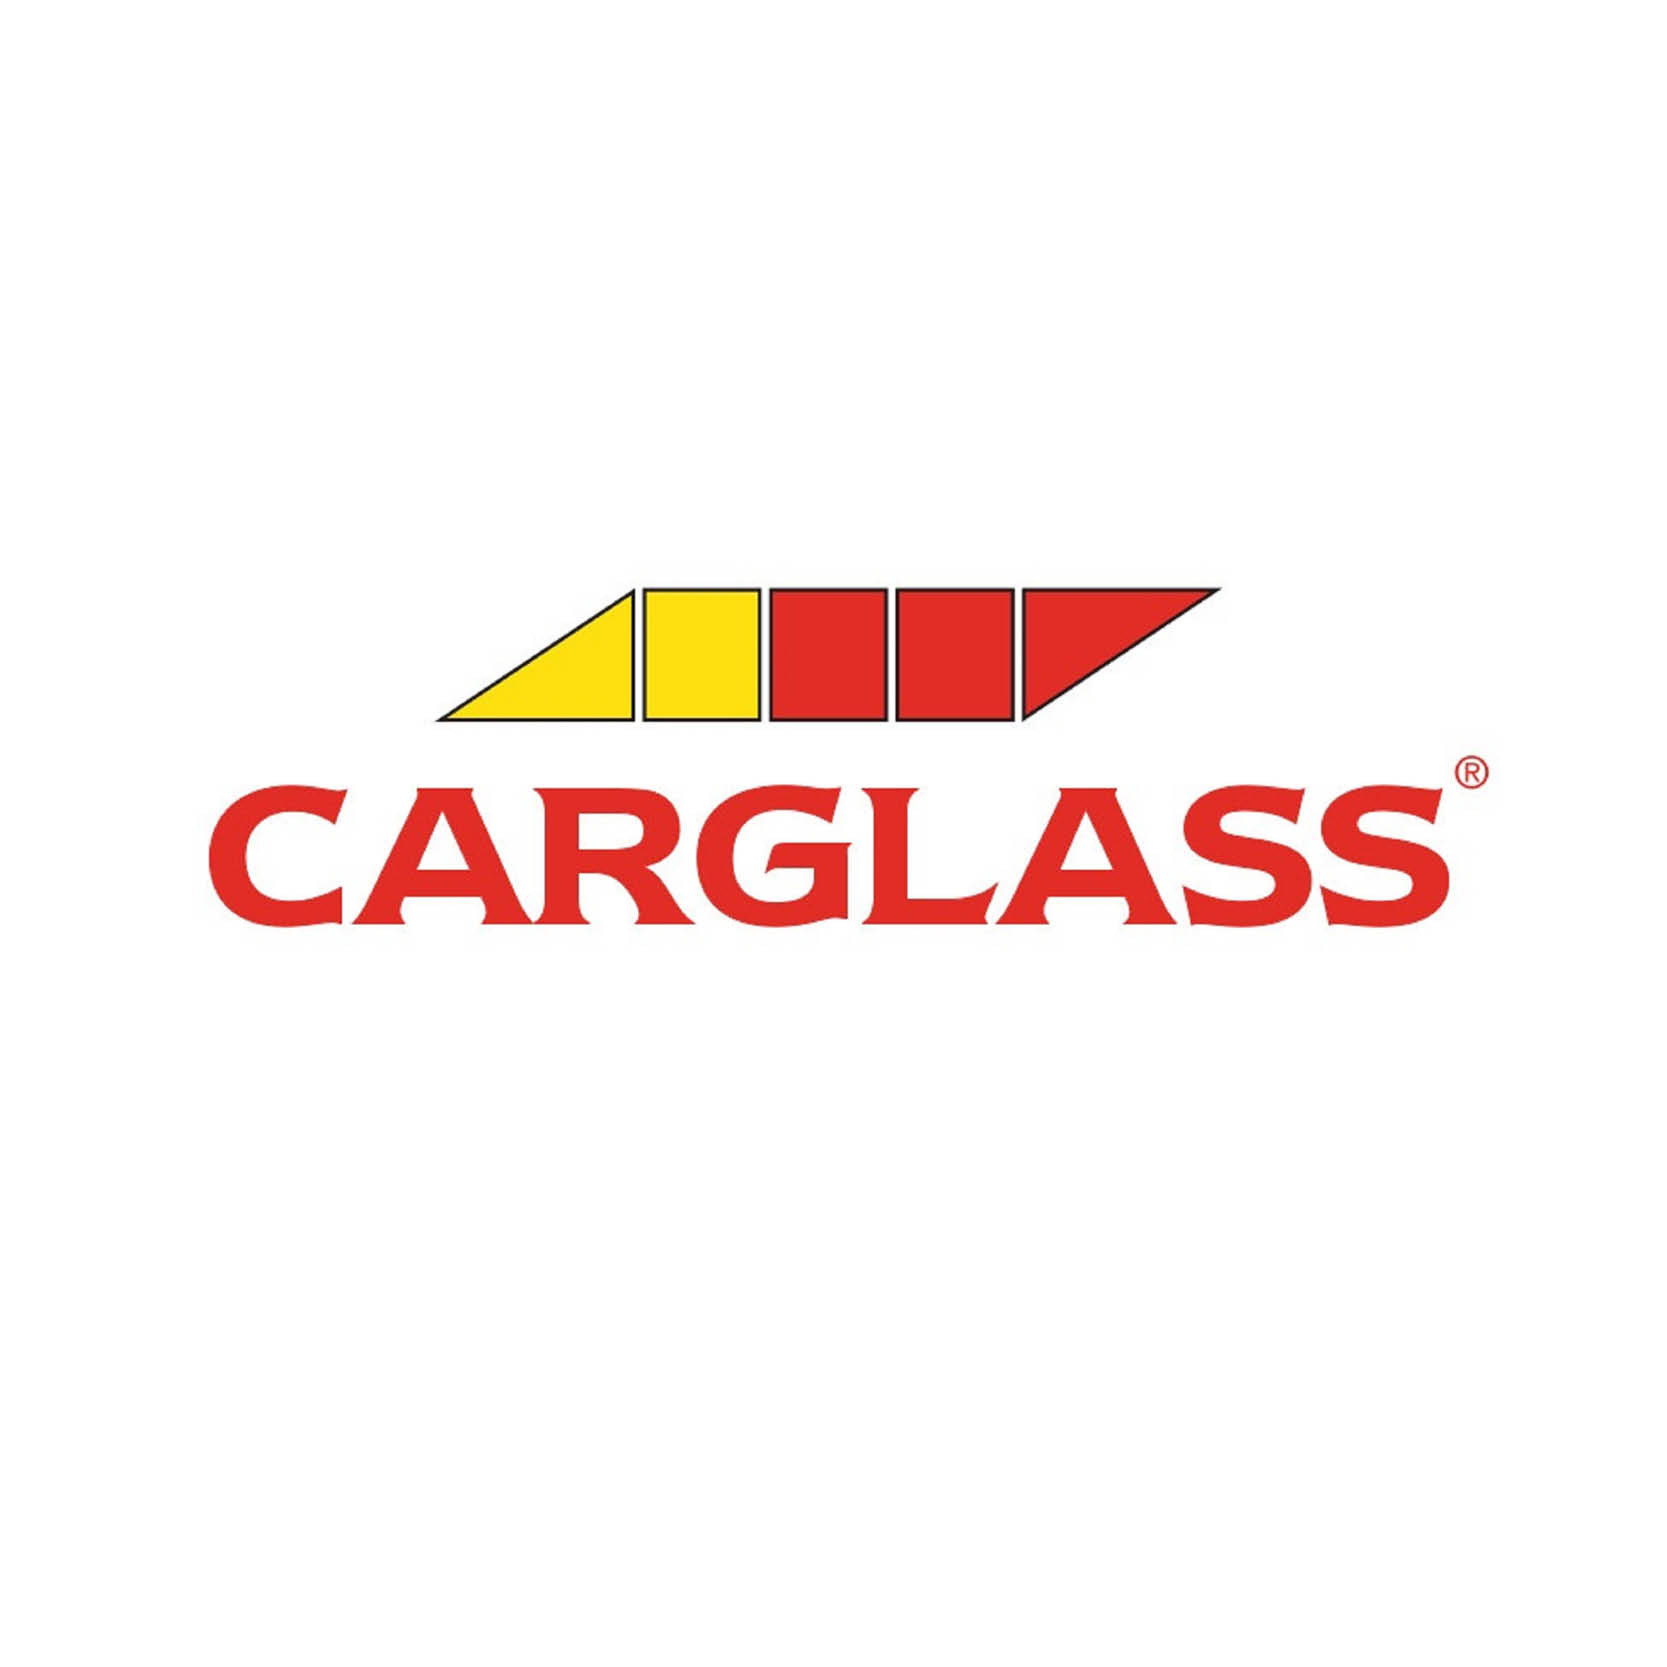 Carglass